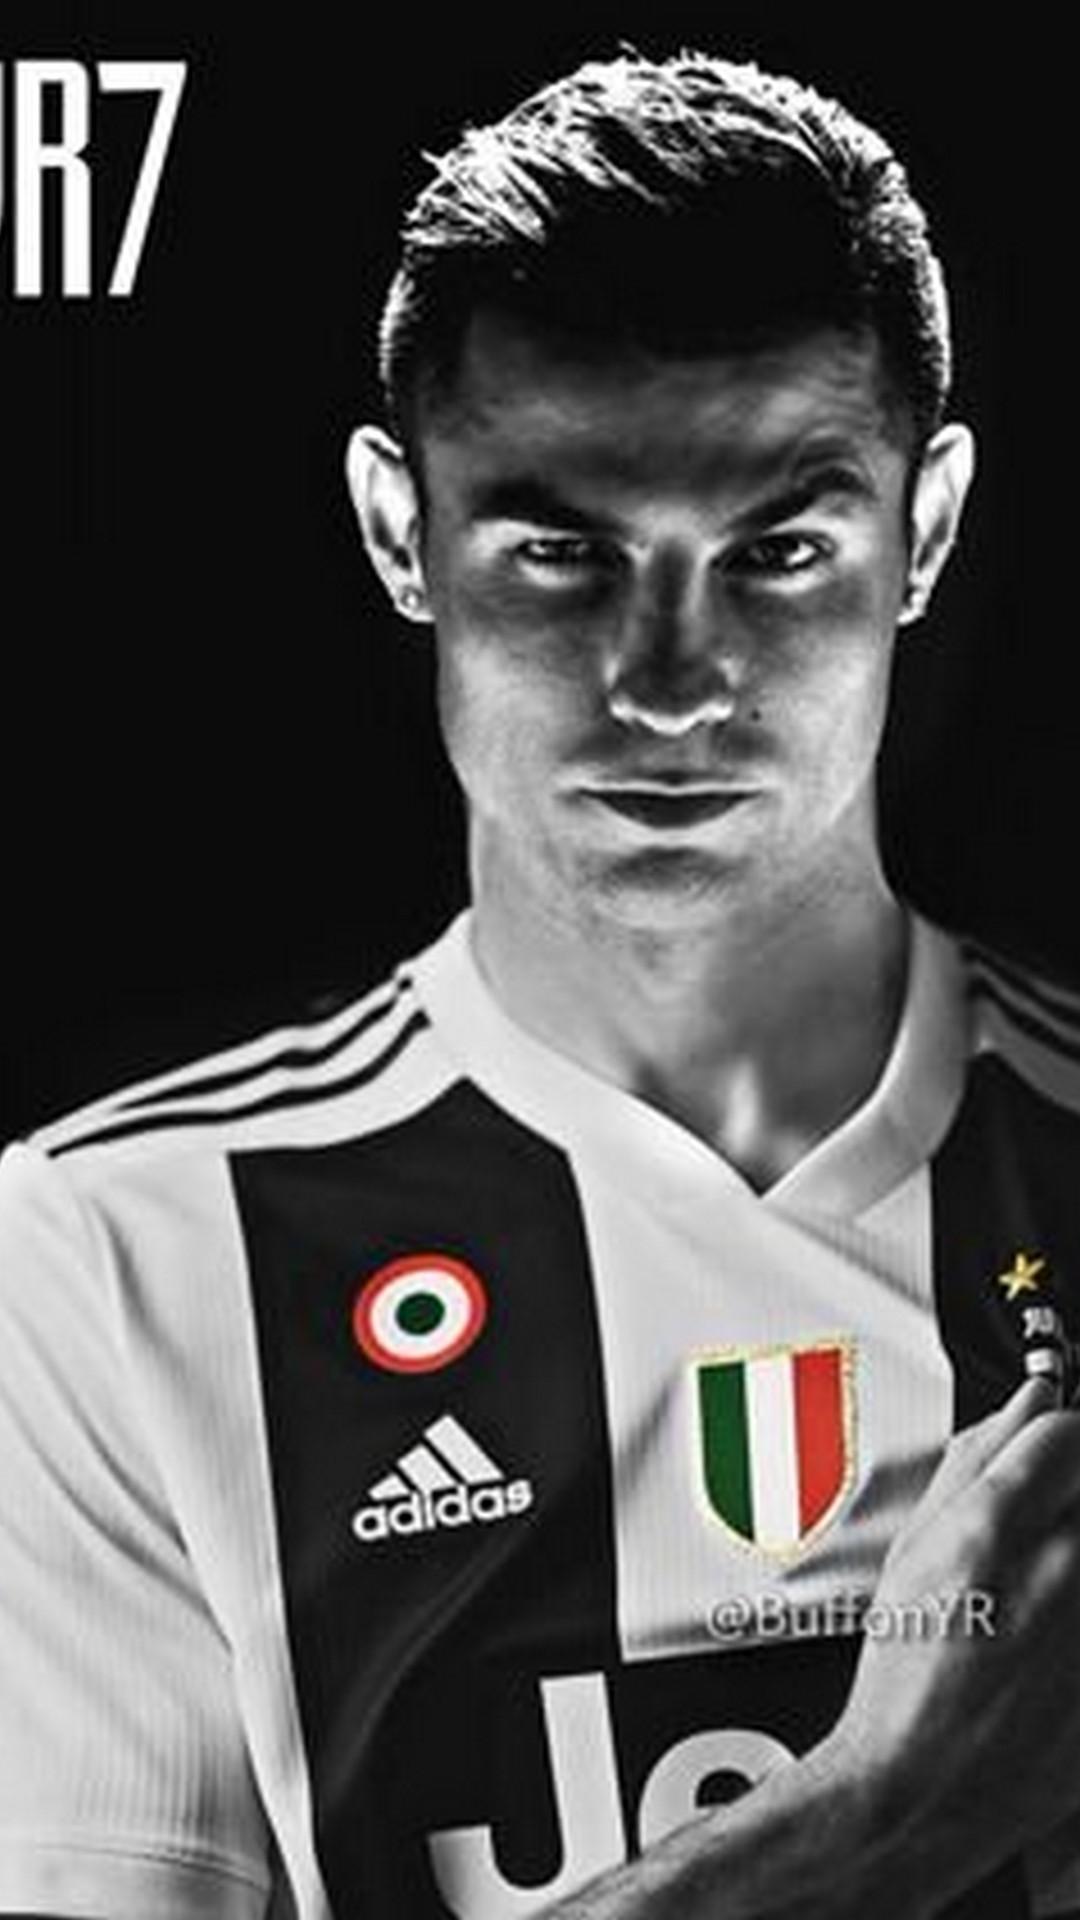 Cristiano Ronaldo Juventus Wallpaper Android Android Wallpaper